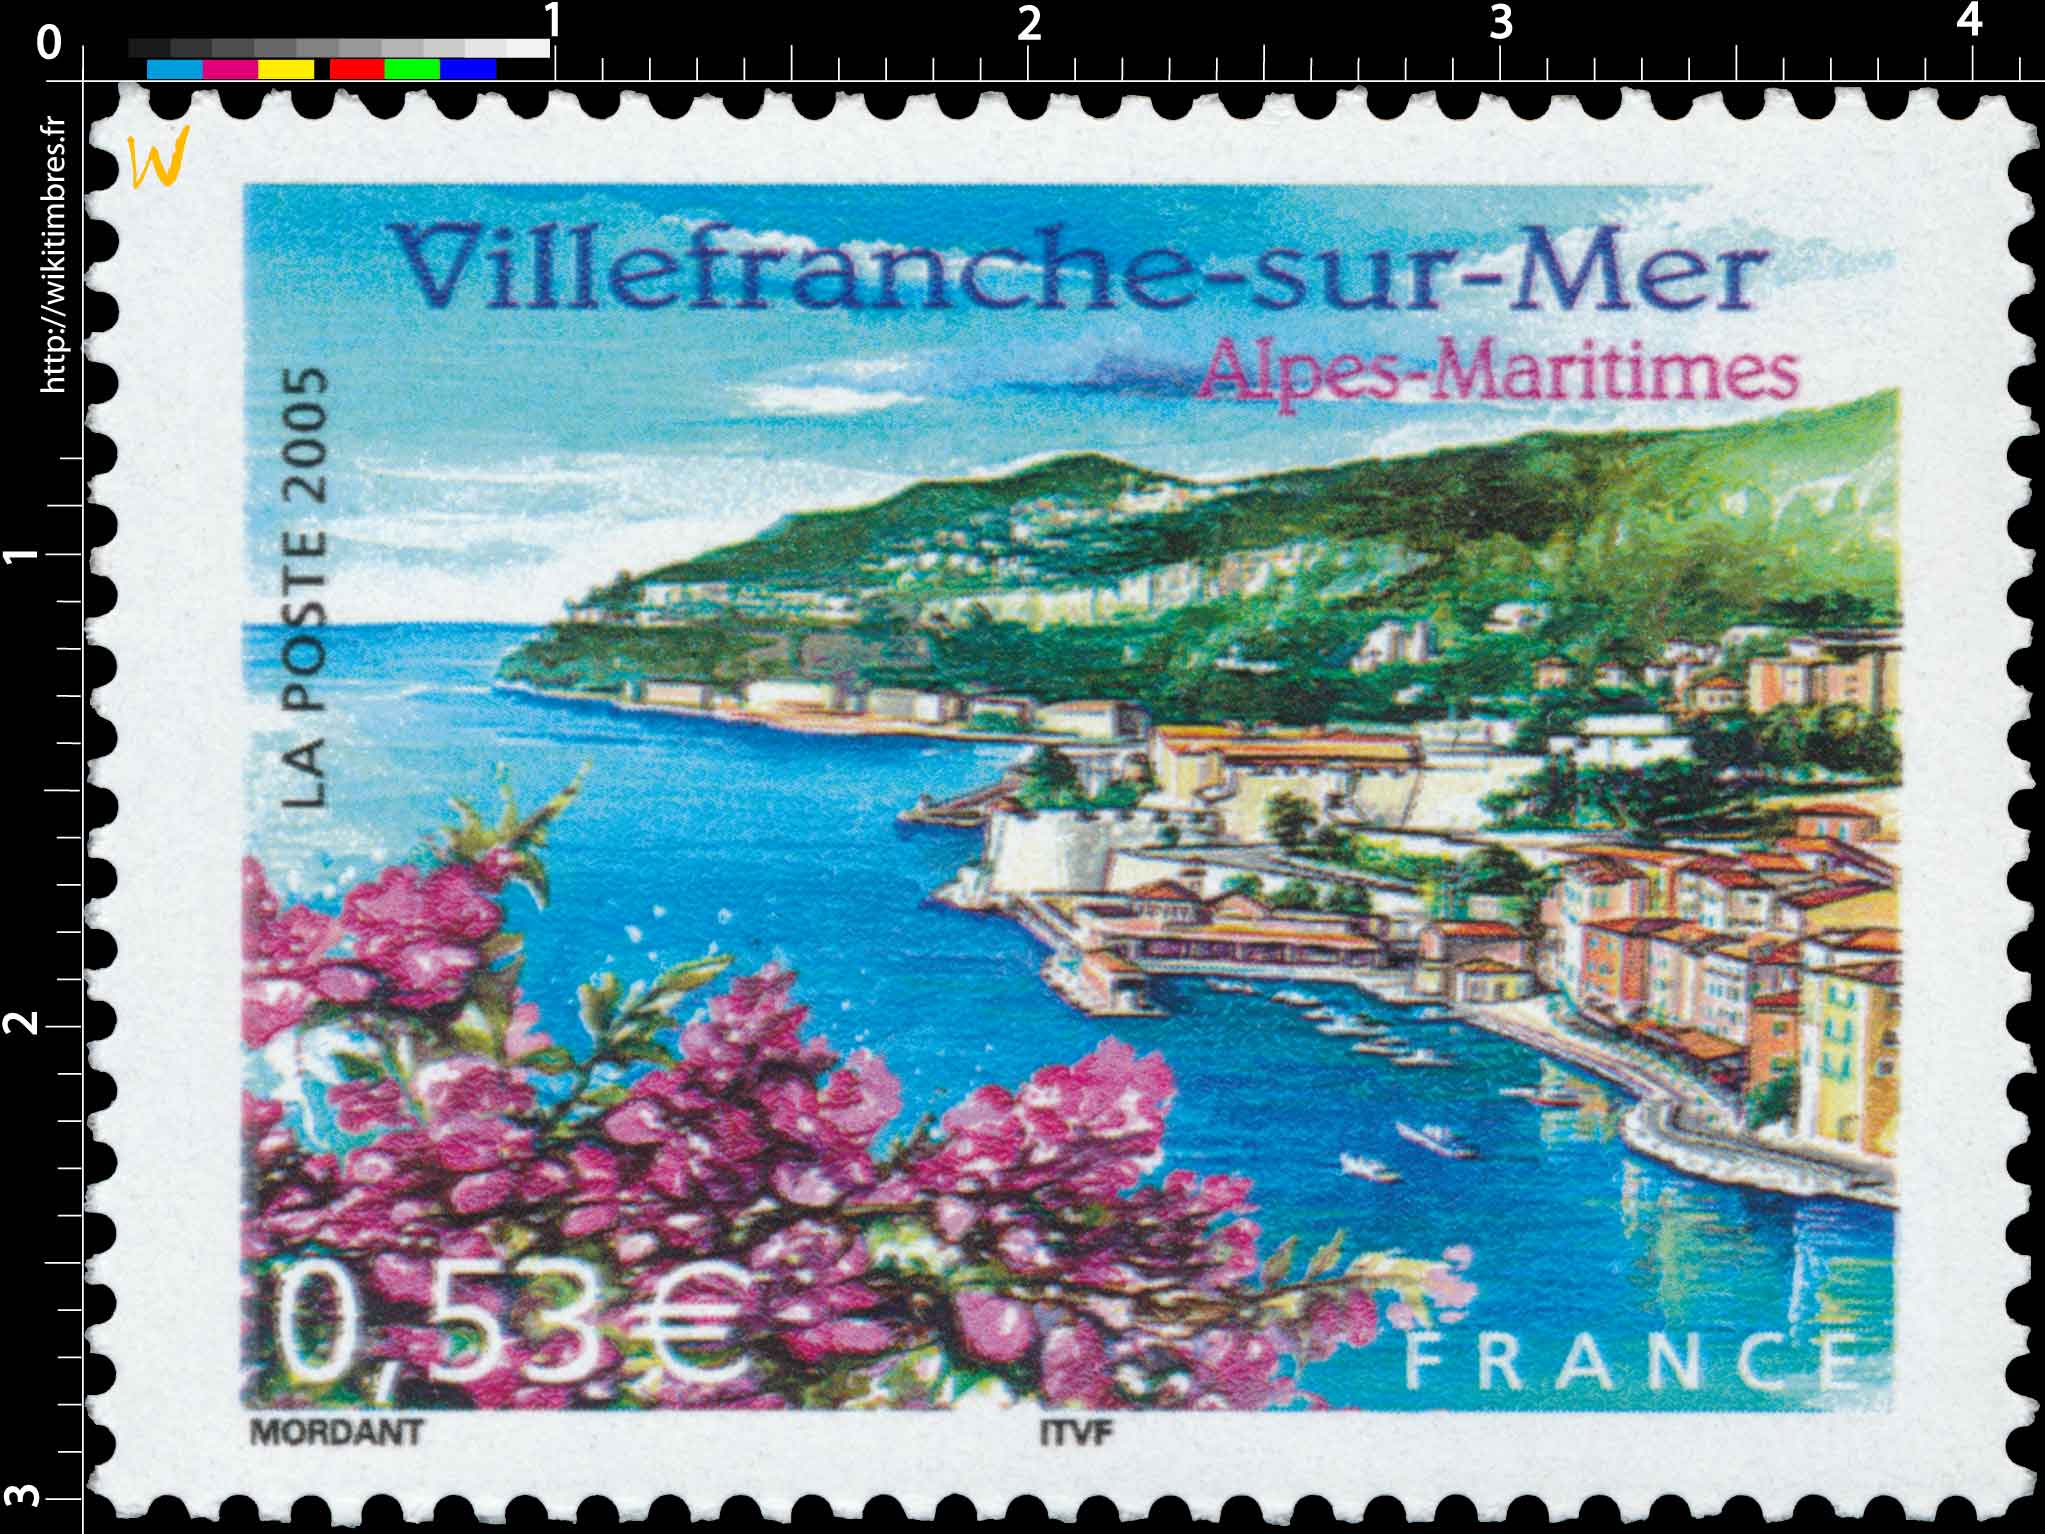 2005 Villefranche-sur-Mer Alpes-Maritimes